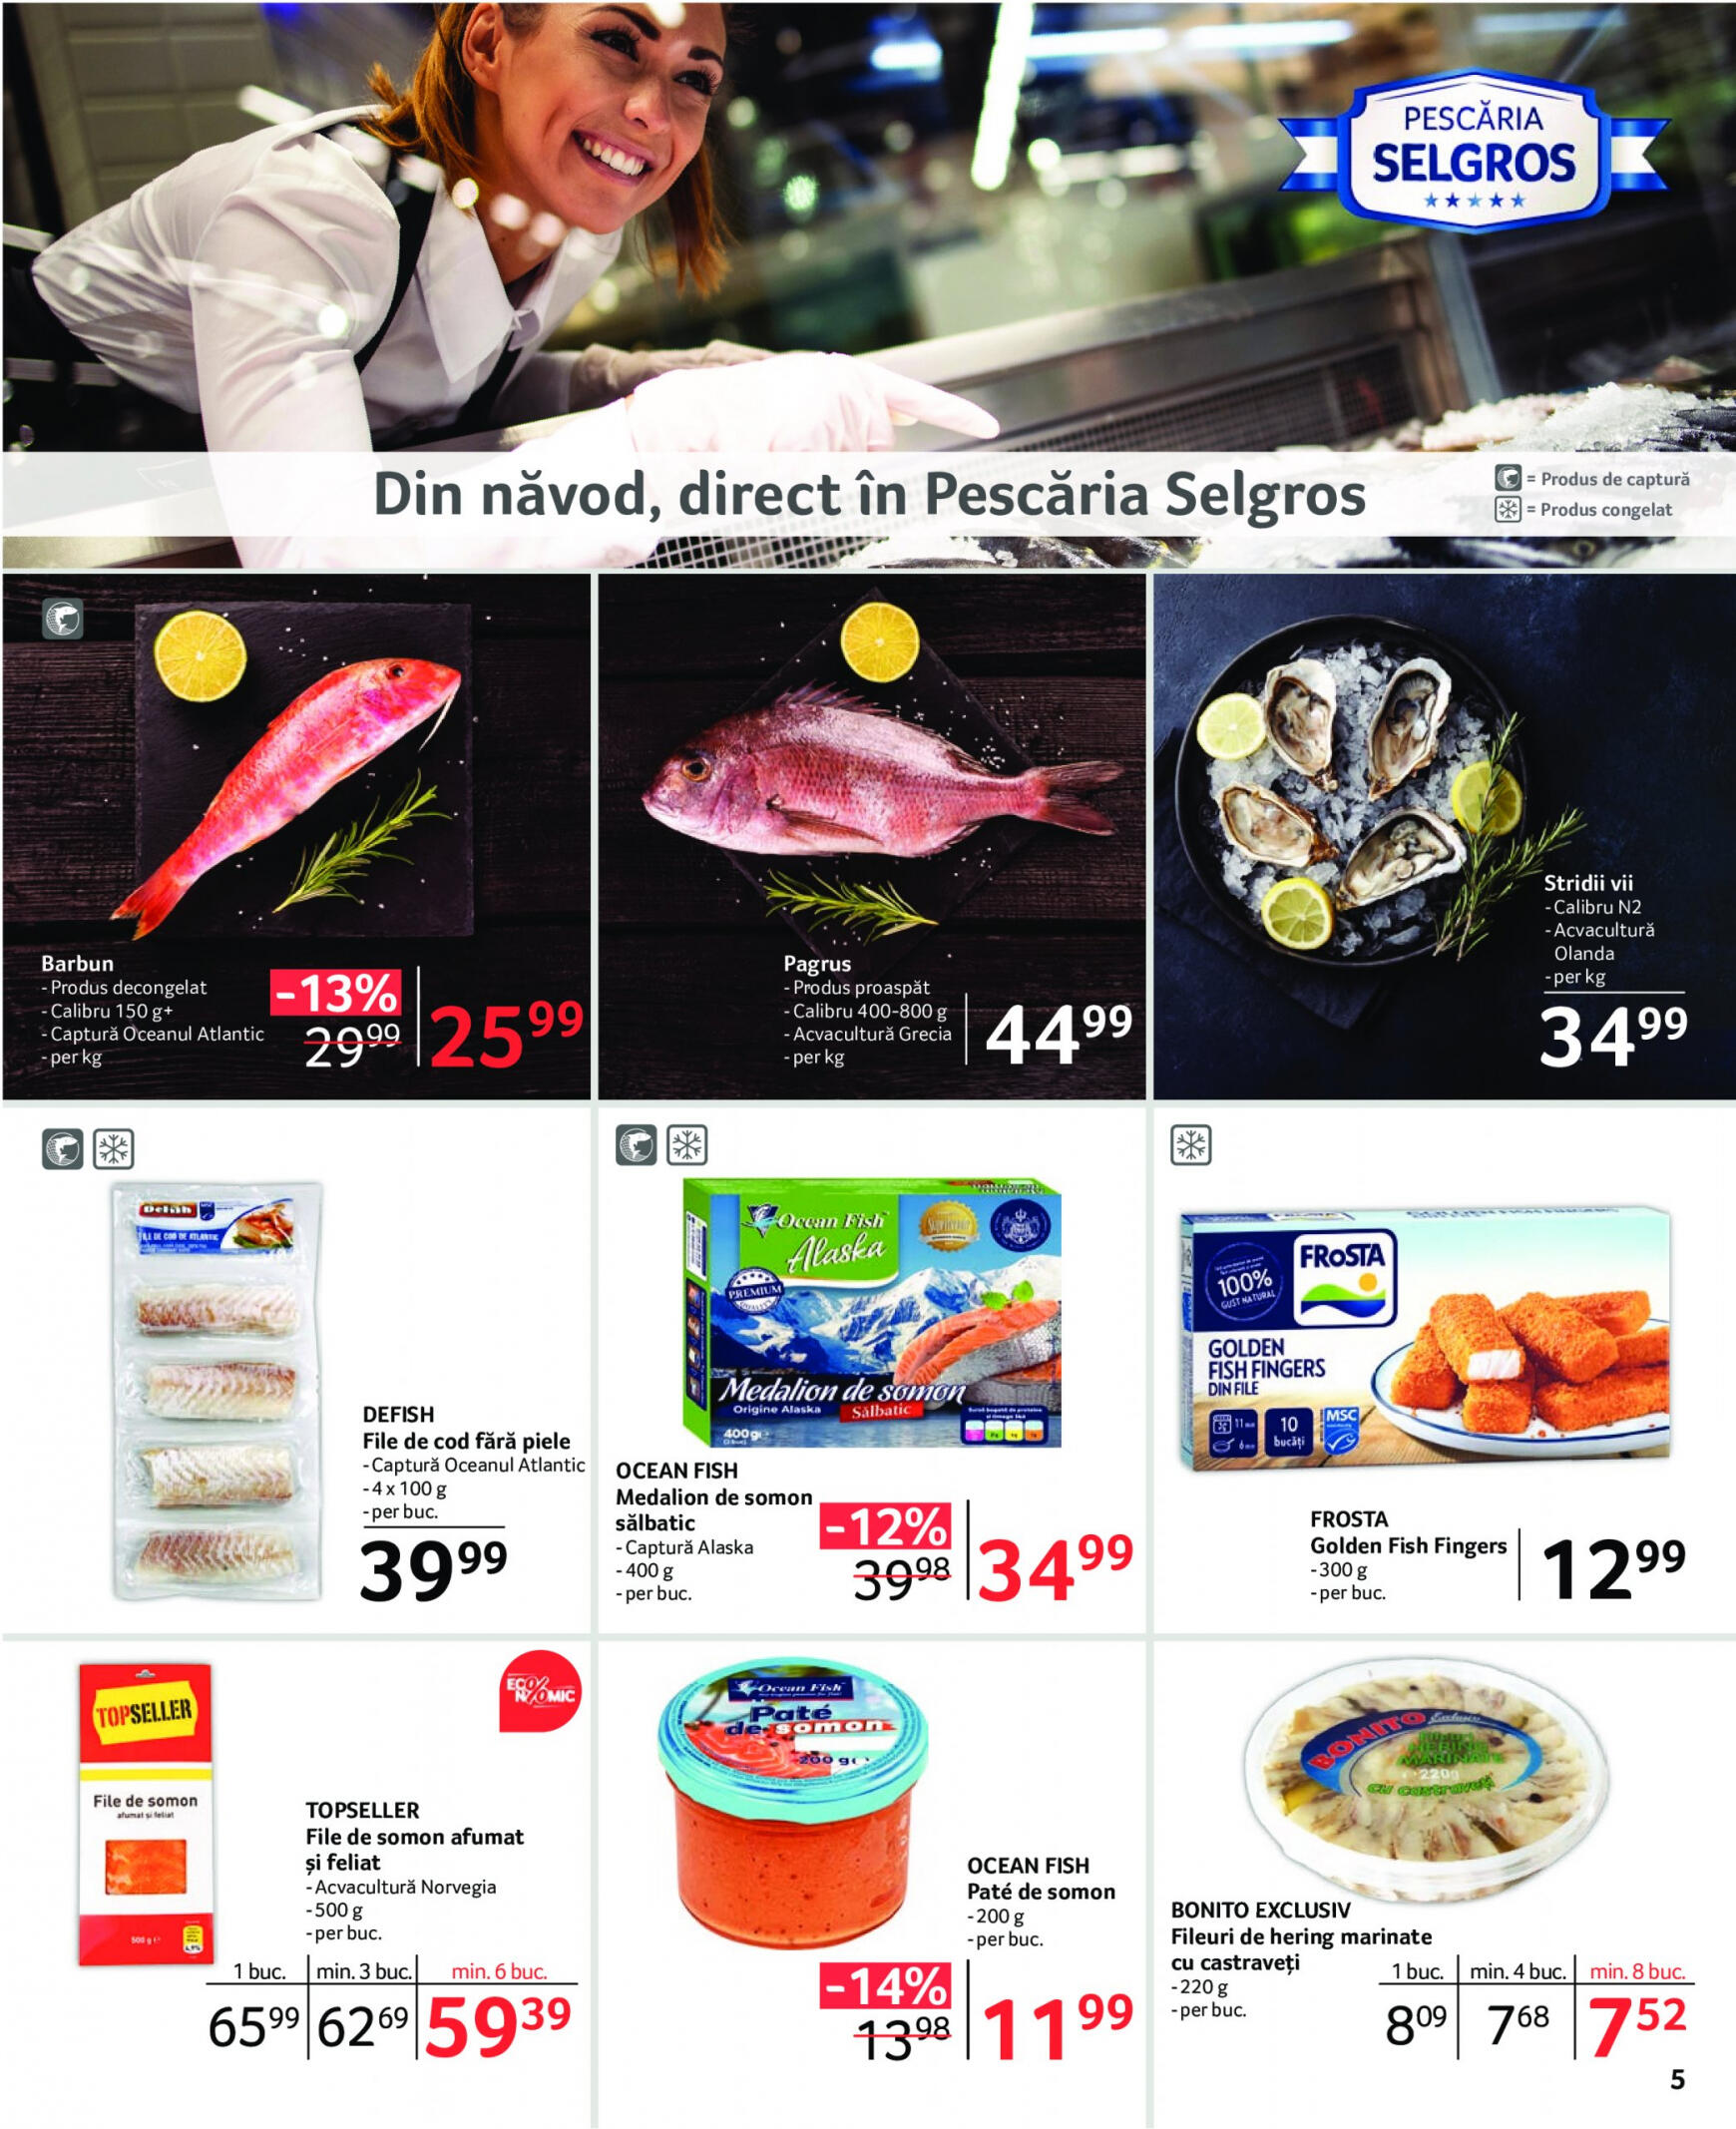 selgros - Catalog nou Selgros - Food & Nonfood 17.05. - 30.05. - page: 5